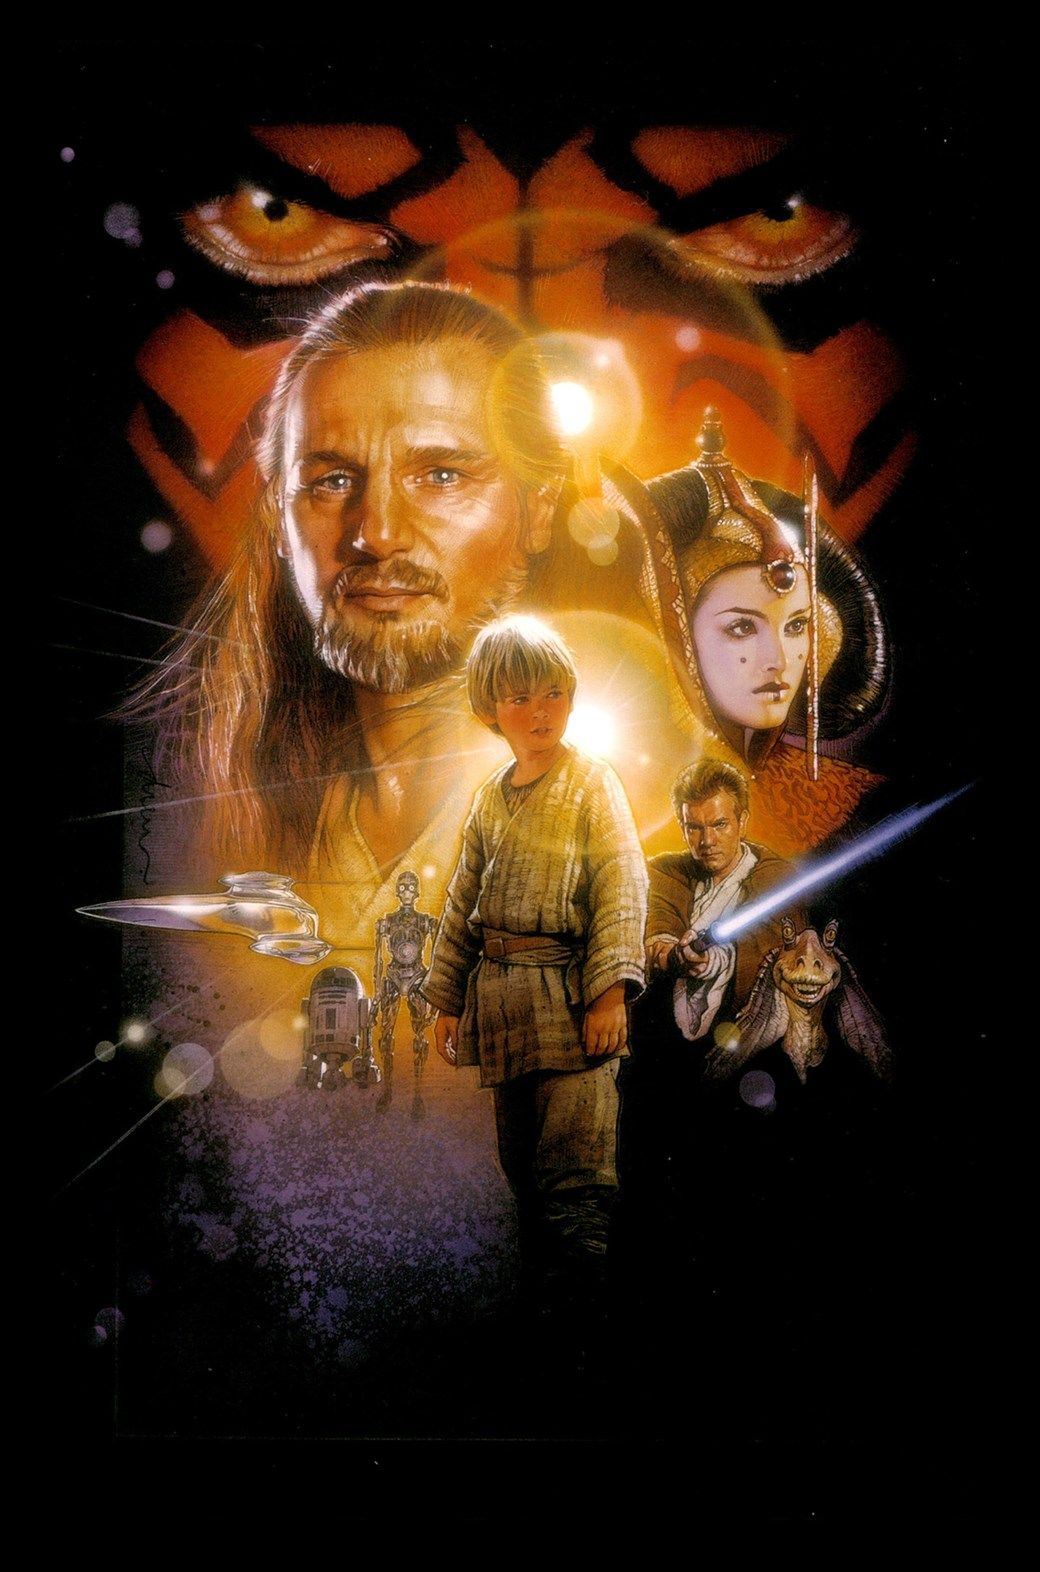 Wallpaper De Filmes - Star Wars The Phantom Menace Textless Poster - HD Wallpaper 